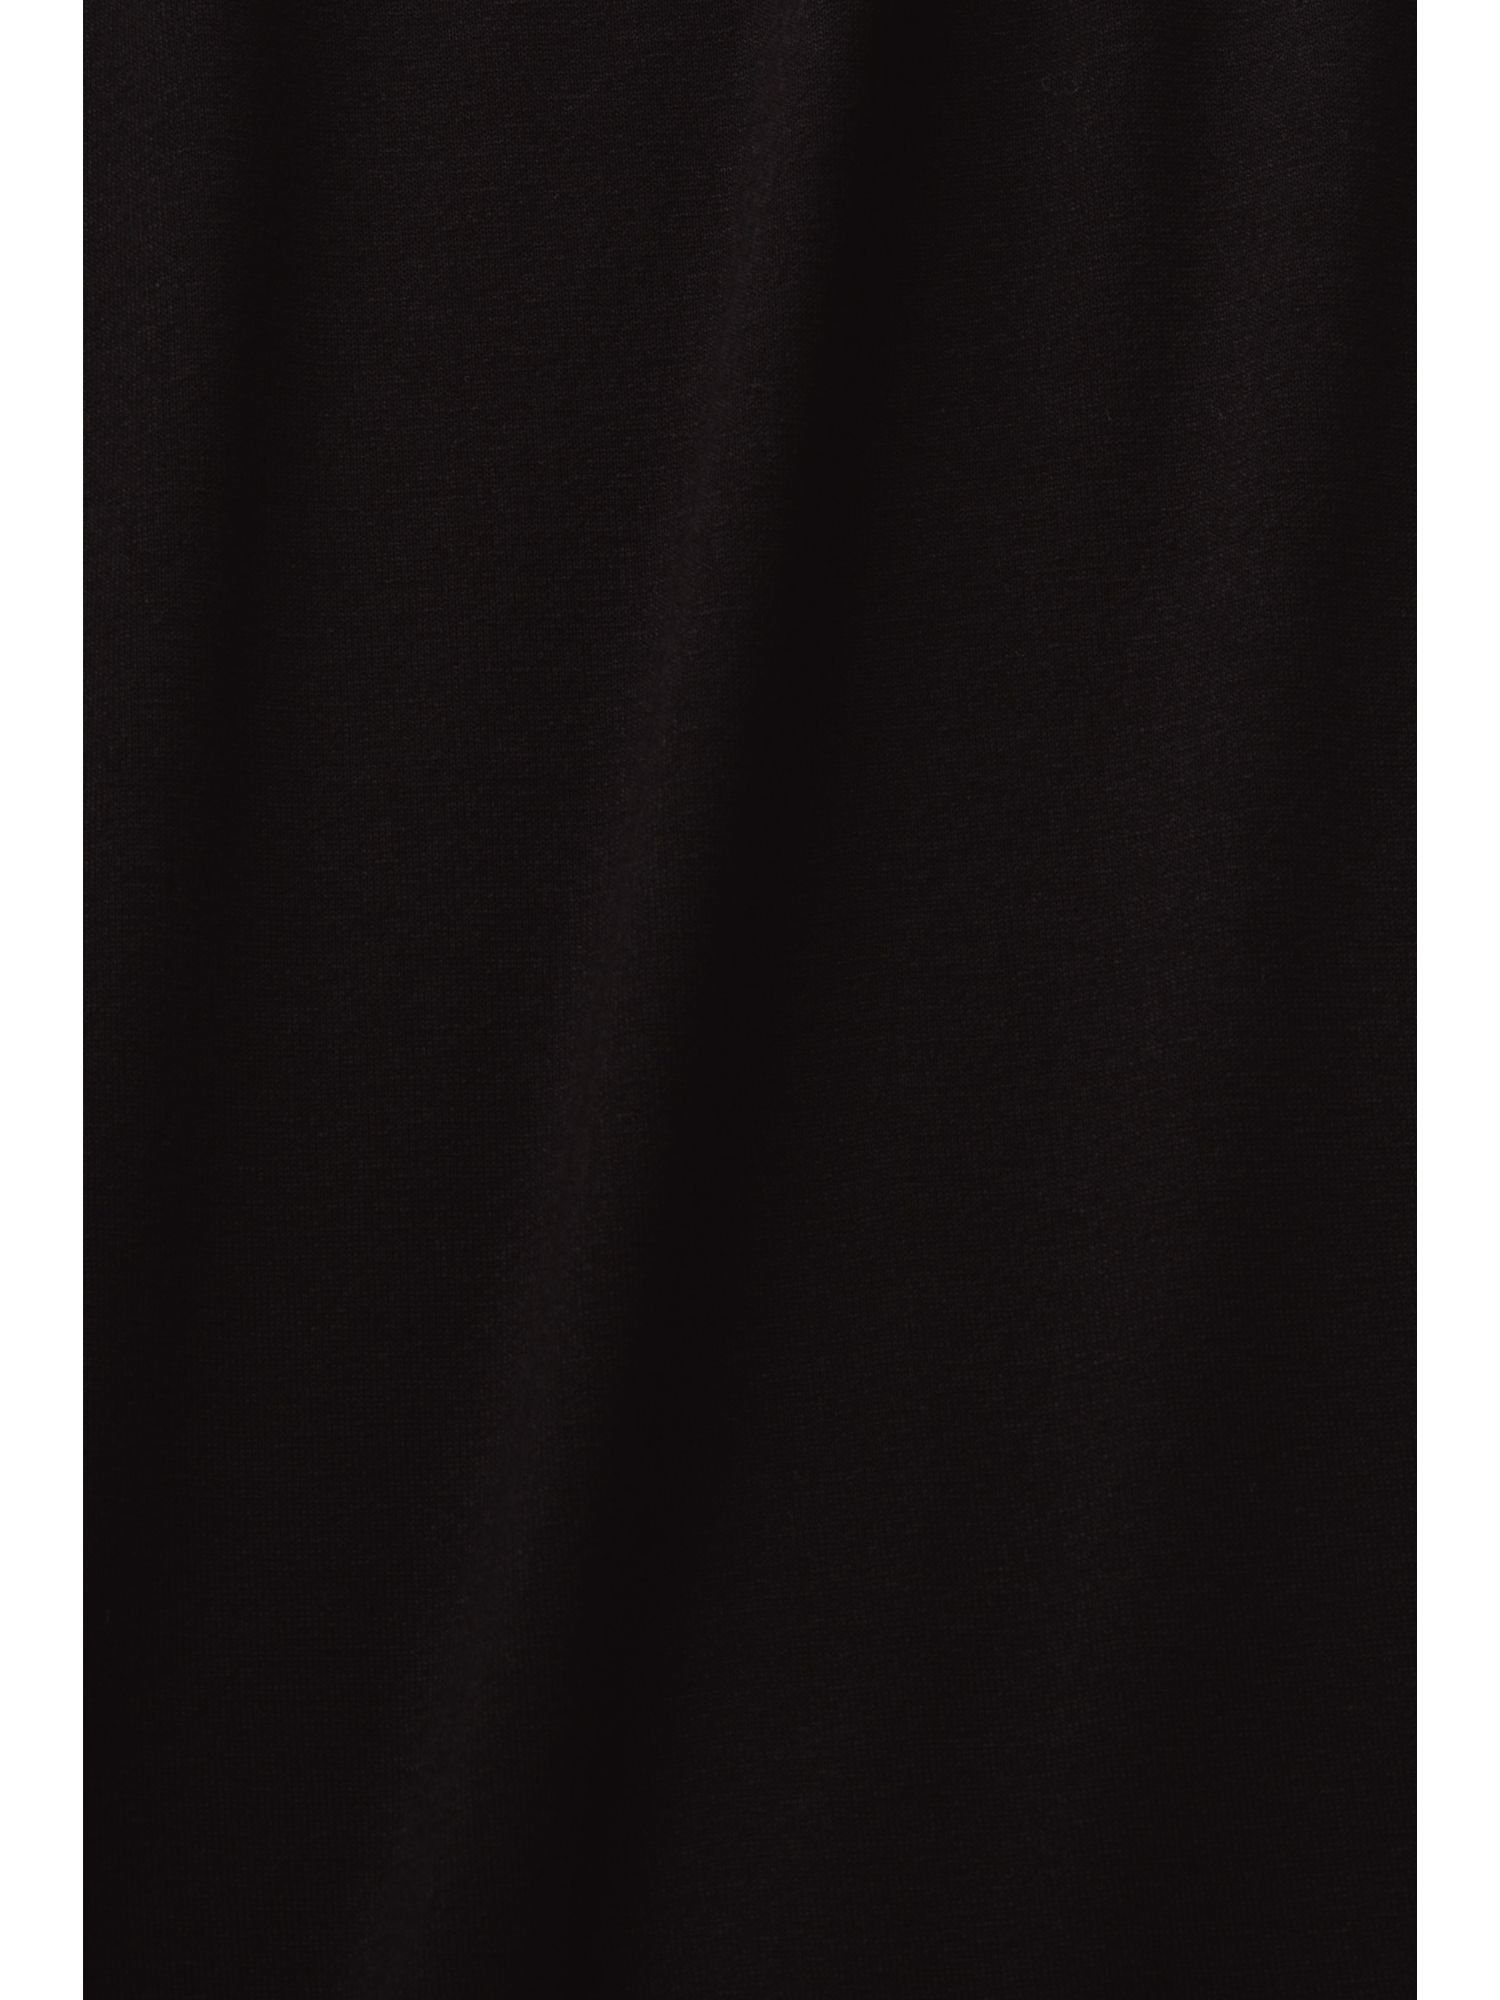 Esprit BLACK Minikleid Jersey-Kleid edc Gemustertes by